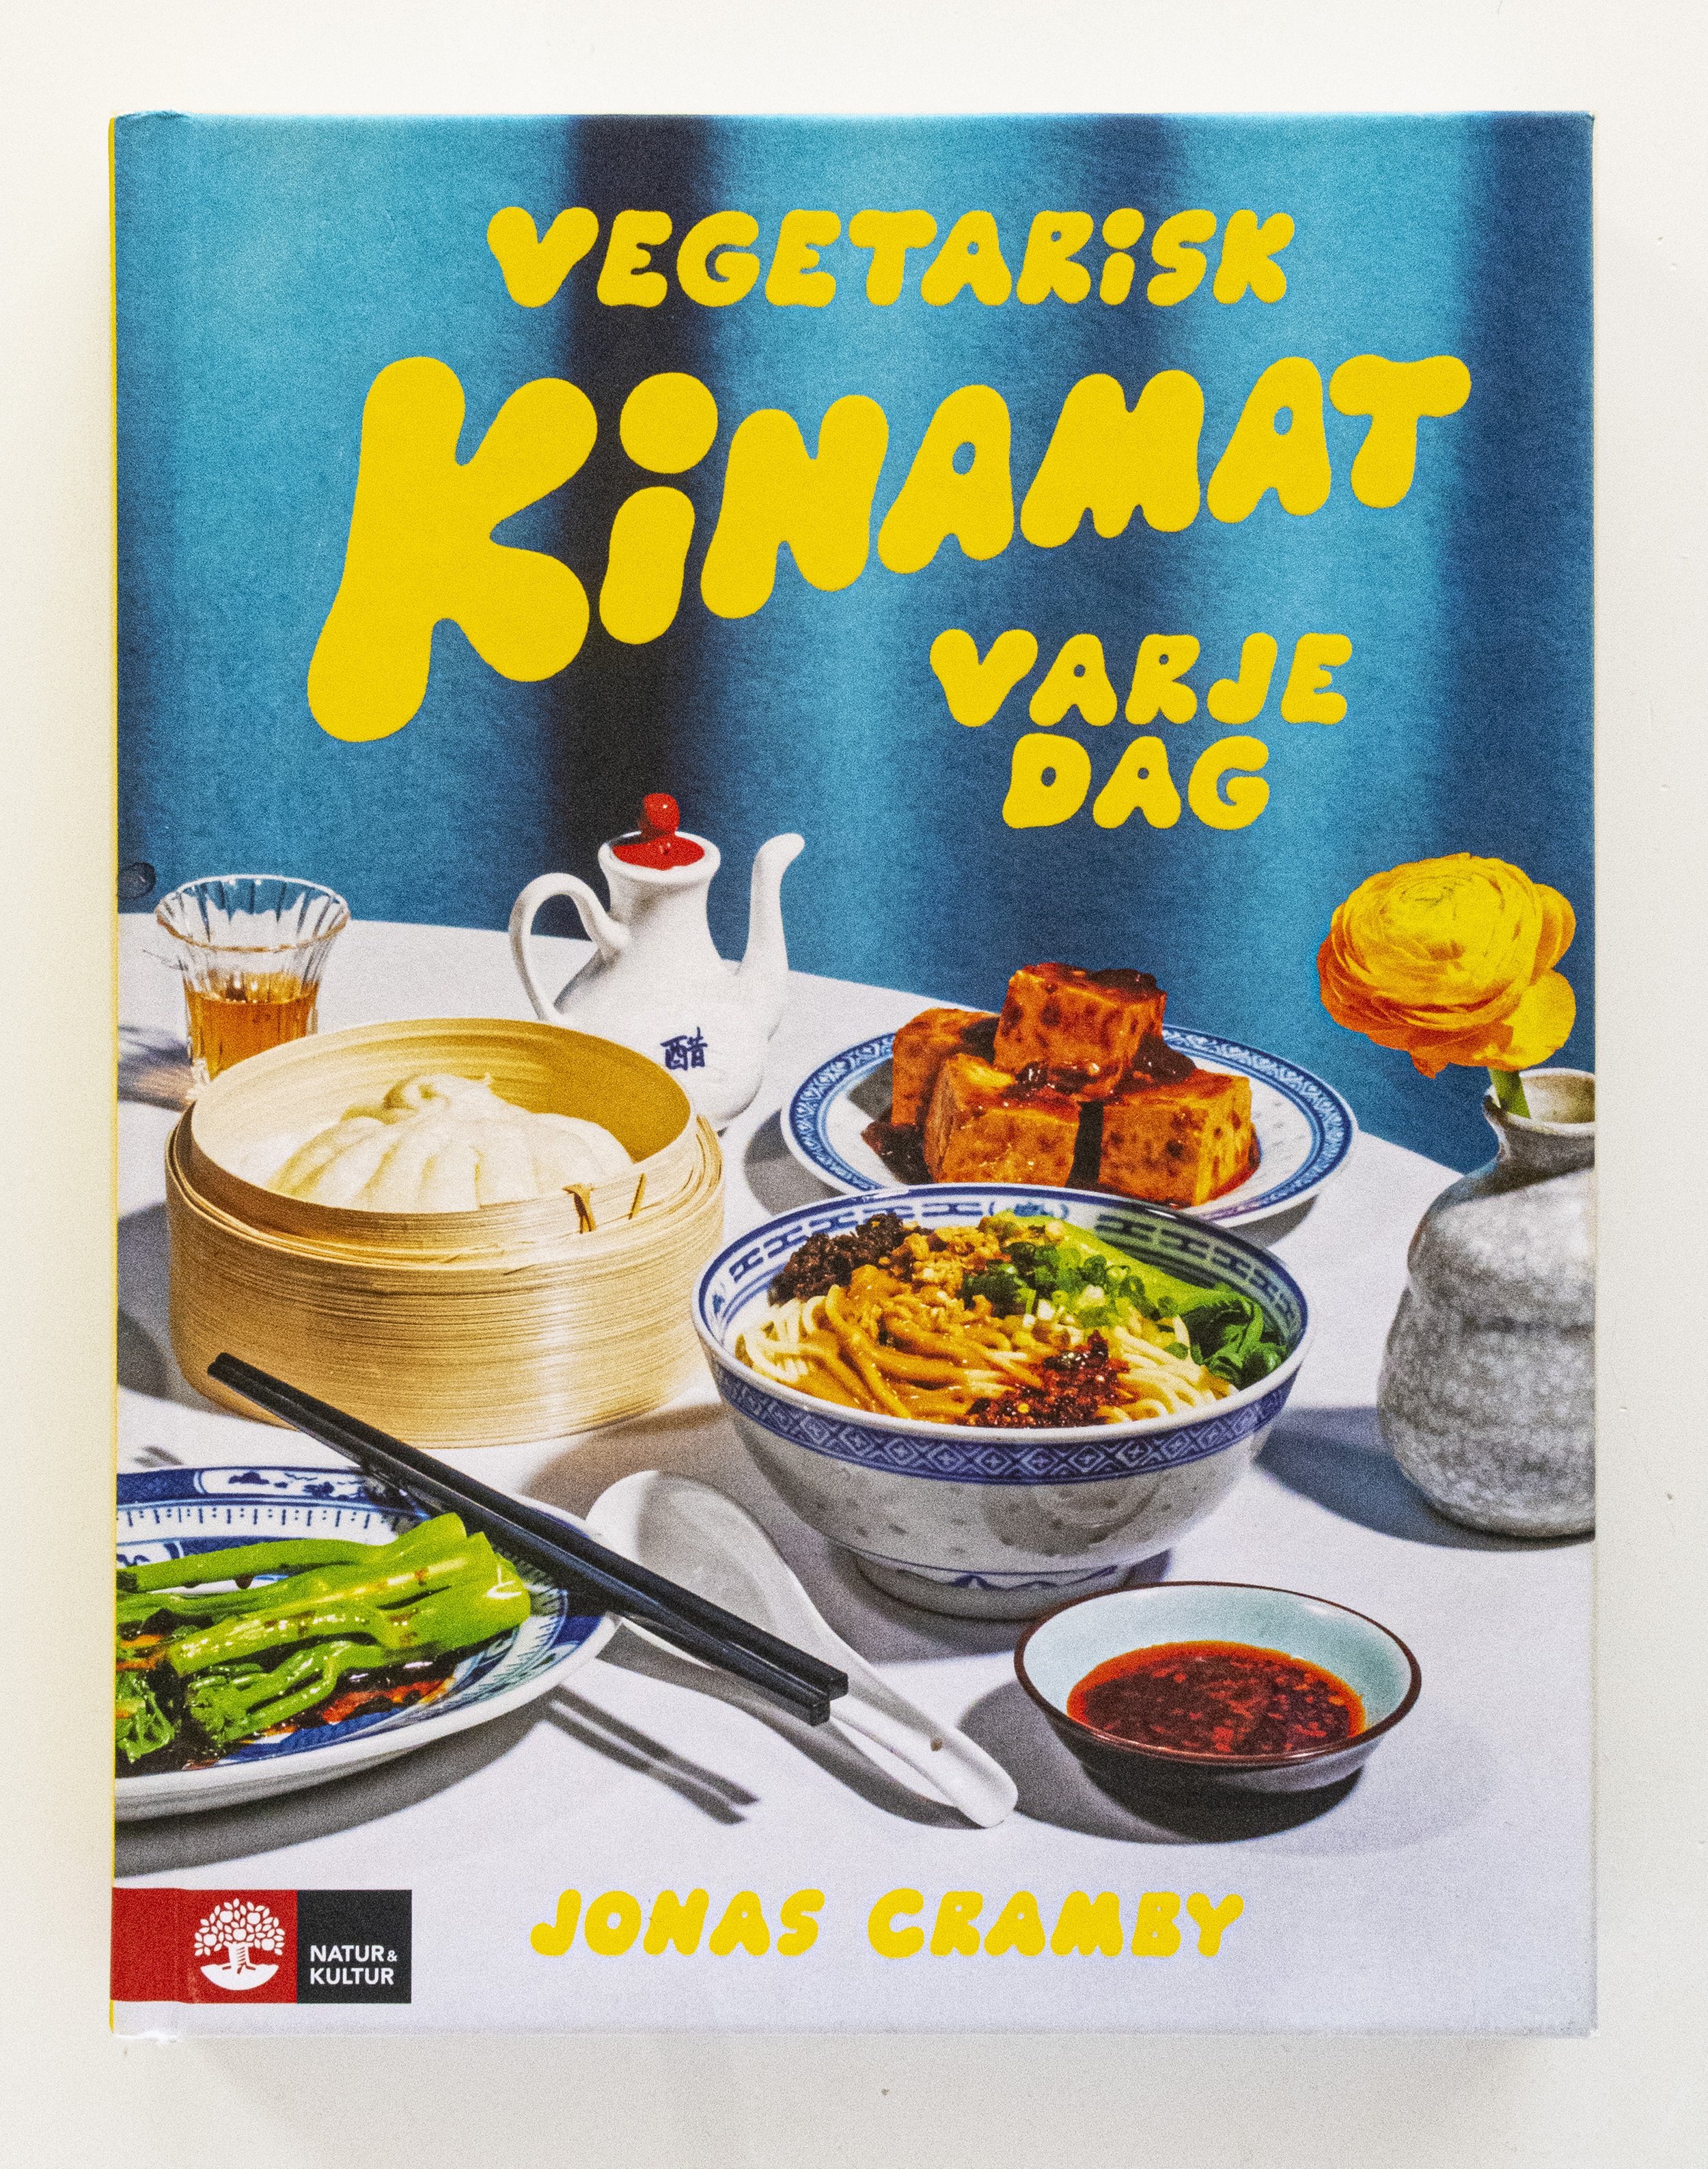 Vegetarisk Kinamat Varje Dag - Jonas Cramby